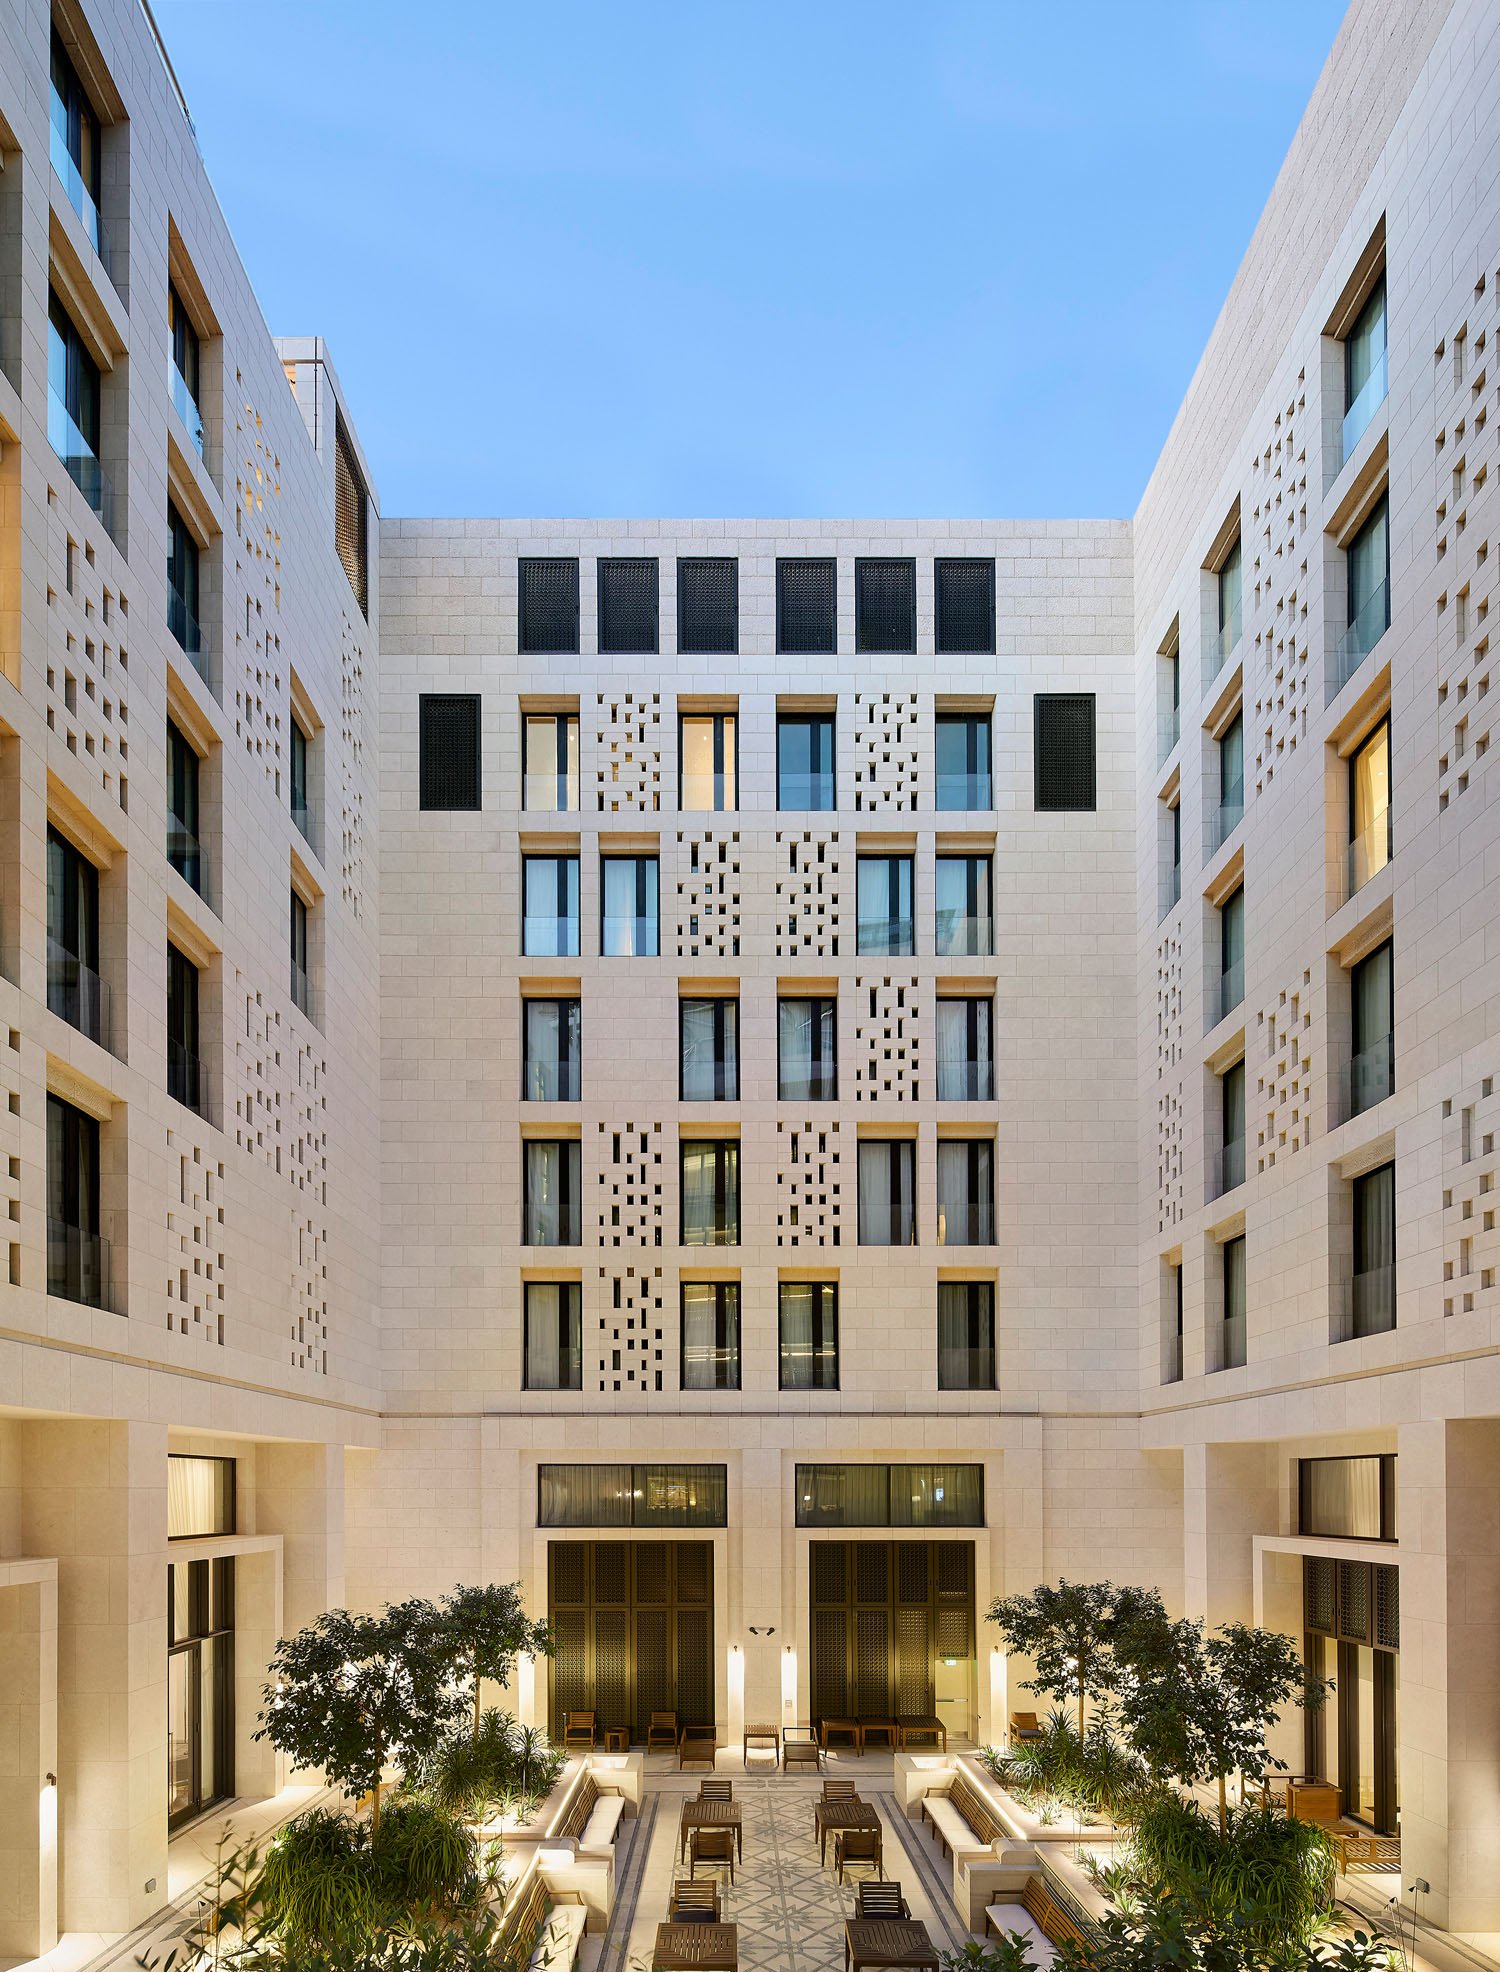  | Mandarin Oriental Hotel – John McAslan + Partners - Hufton & Crow